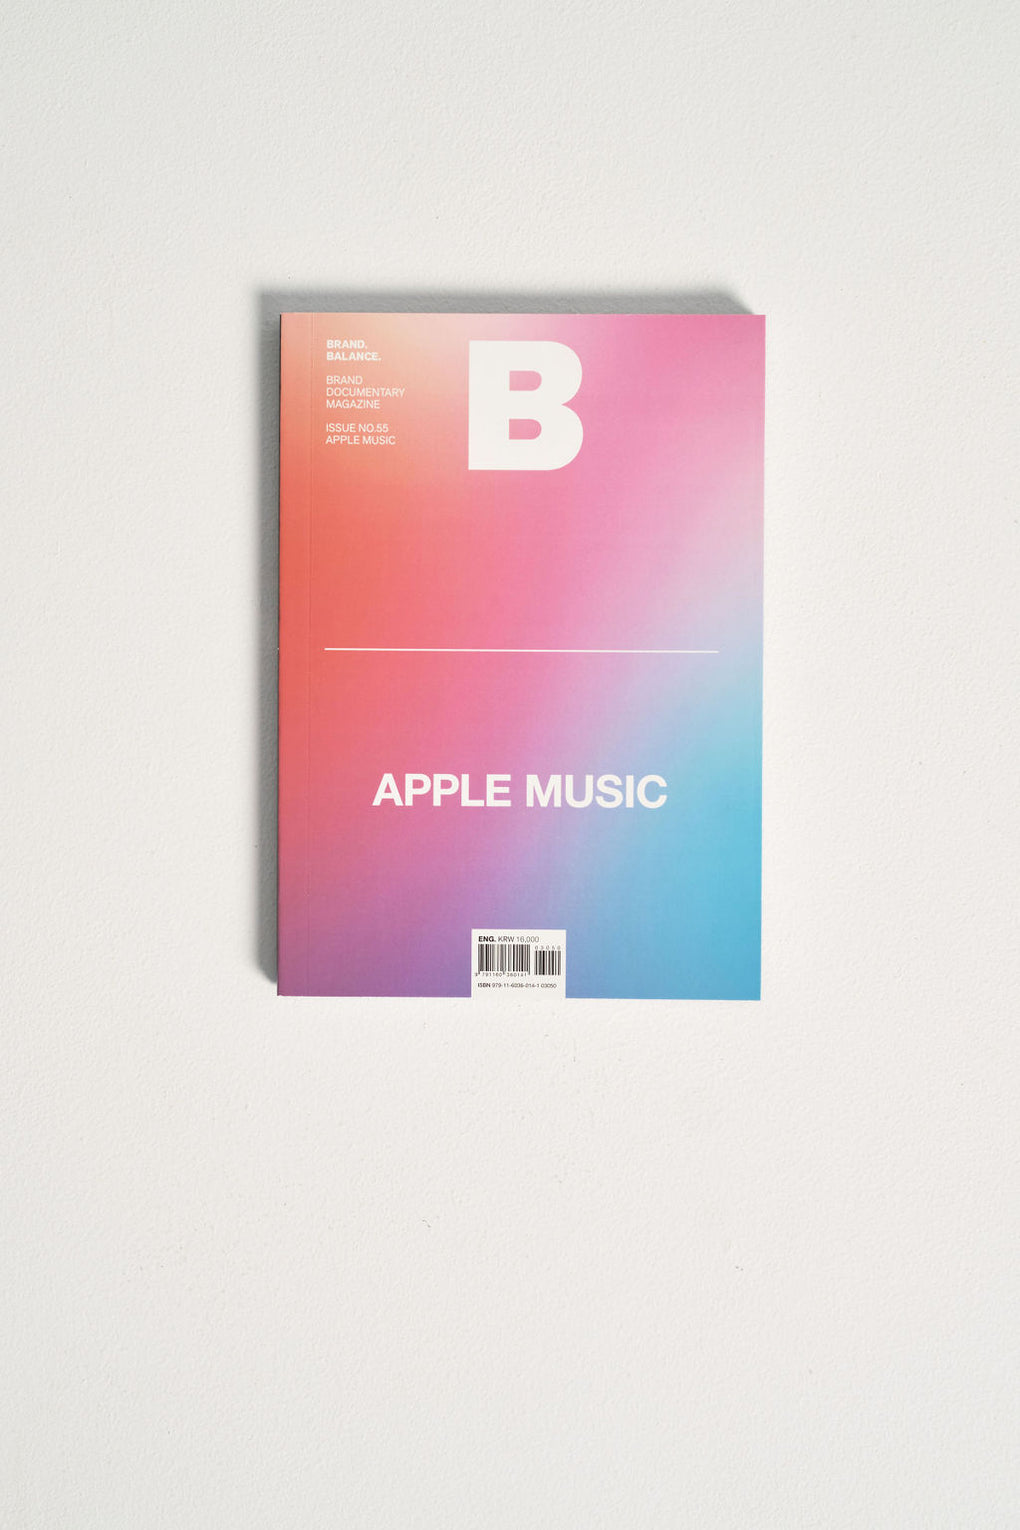 B Magazine: Apple Music